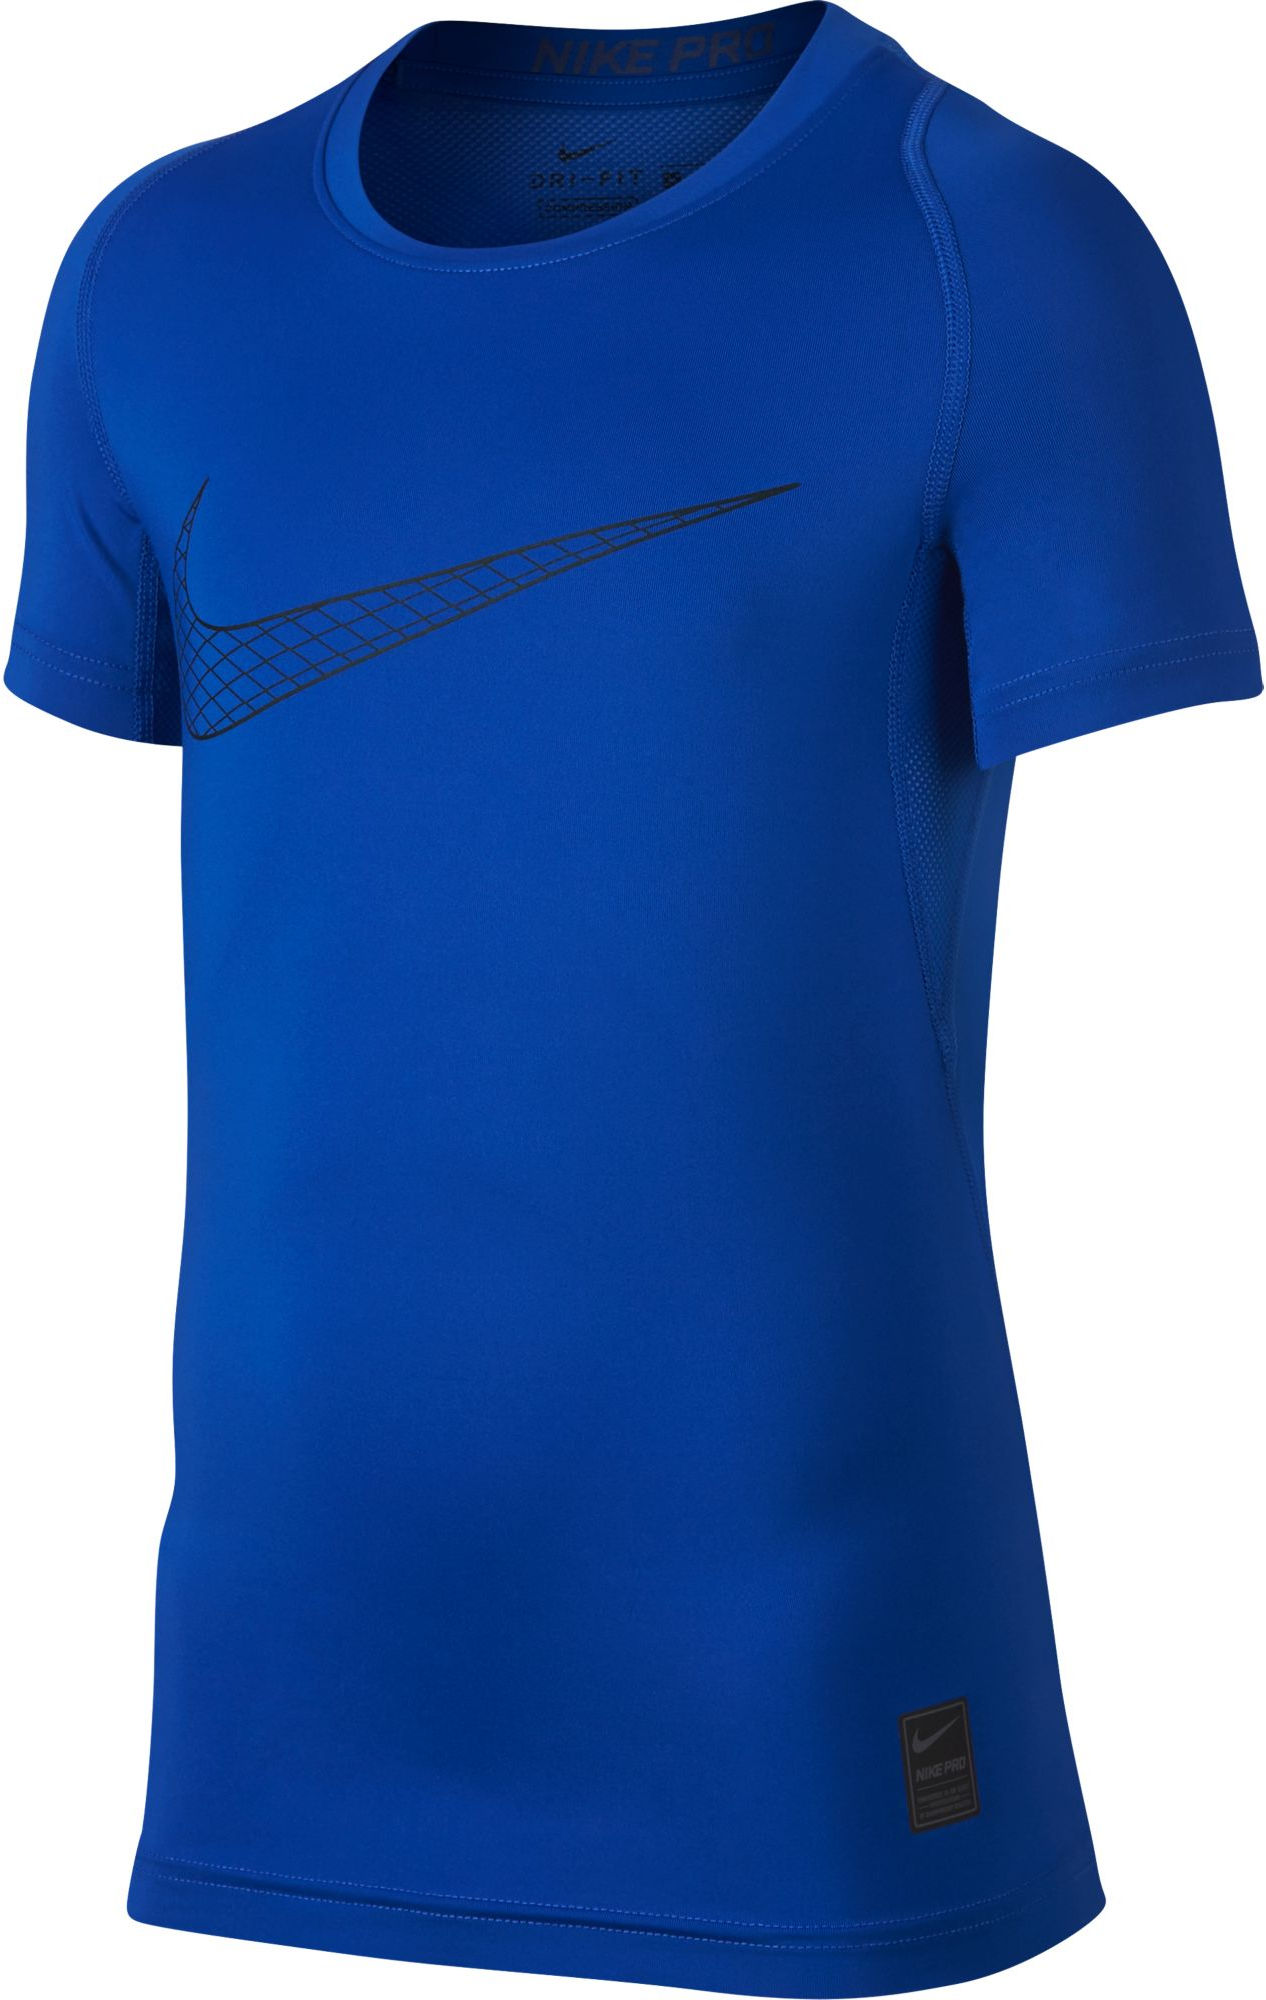 T-shirt Nike B Pro TOP SS COMP